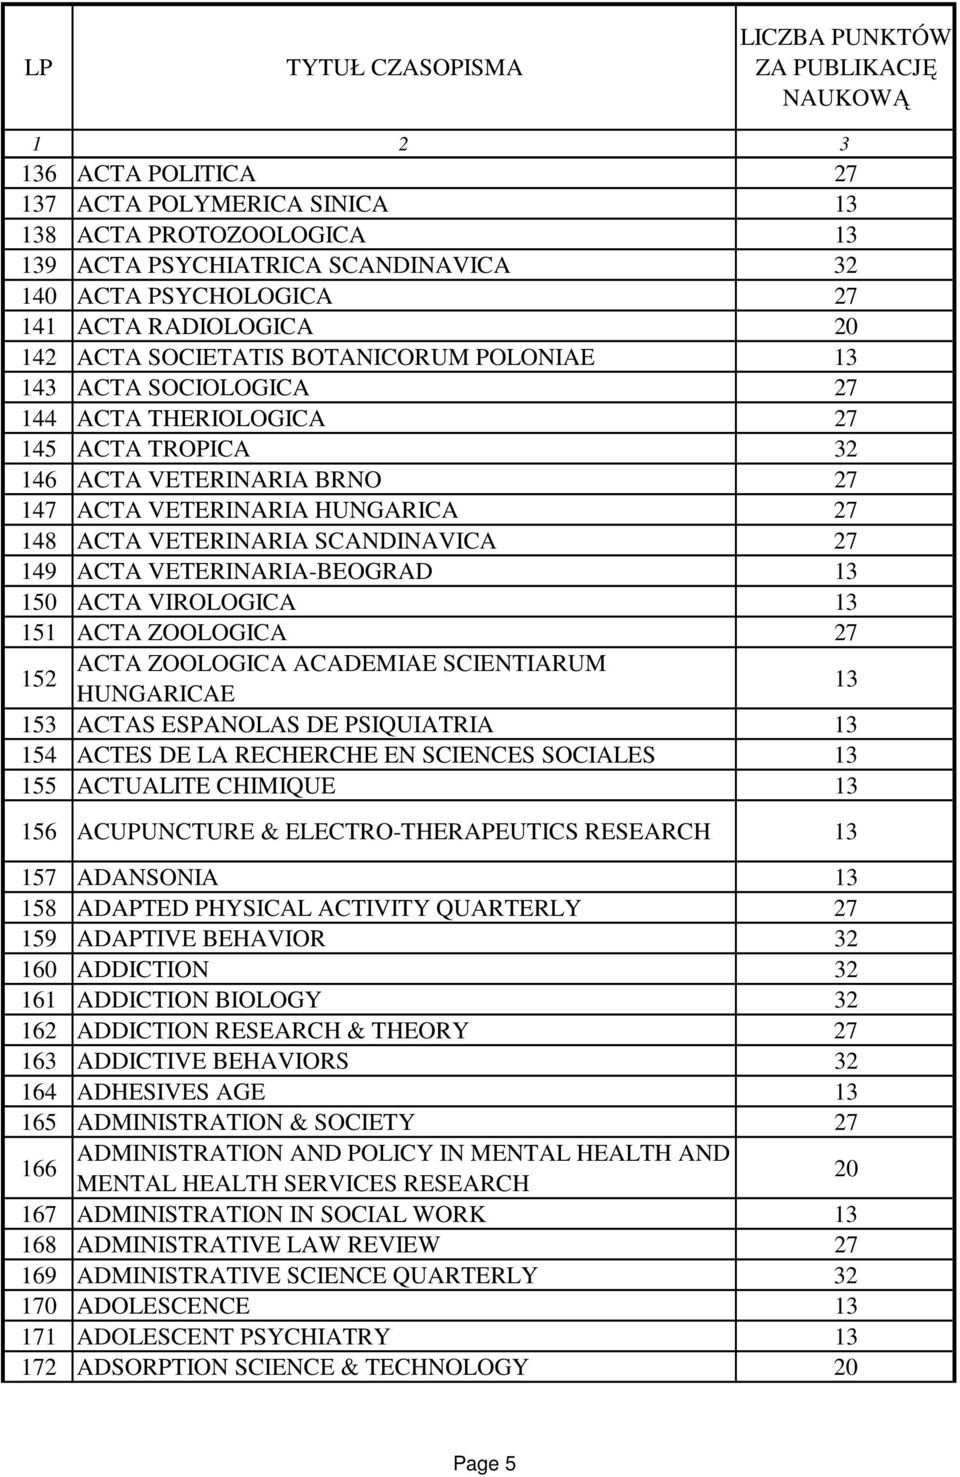 ACTA ZOOLOGICA ACADEMIAE SCIENTIARUM HUNGARICAE 153 ACTAS ESPANOLAS DE PSIQUIATRIA 154 ACTES DE LA RECHERCHE EN SCIENCES SOCIALES 155 ACTUALITE CHIMIQUE 15 ACUPUNCTURE & ELECTRO-THERAPEUTICS RESEARCH